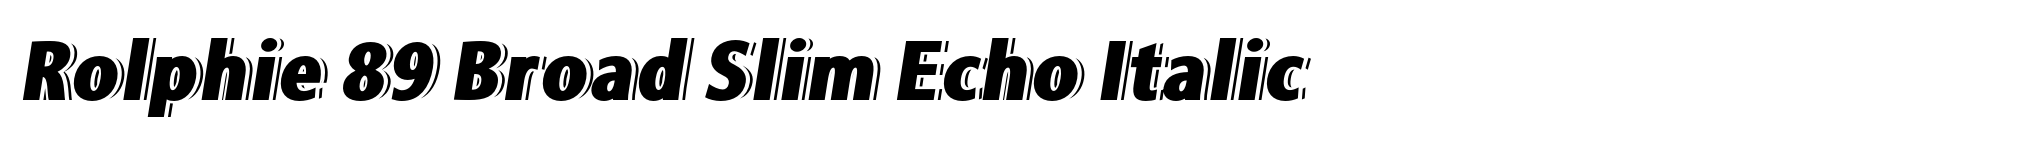 Rolphie 89 Broad Slim Echo Italic image